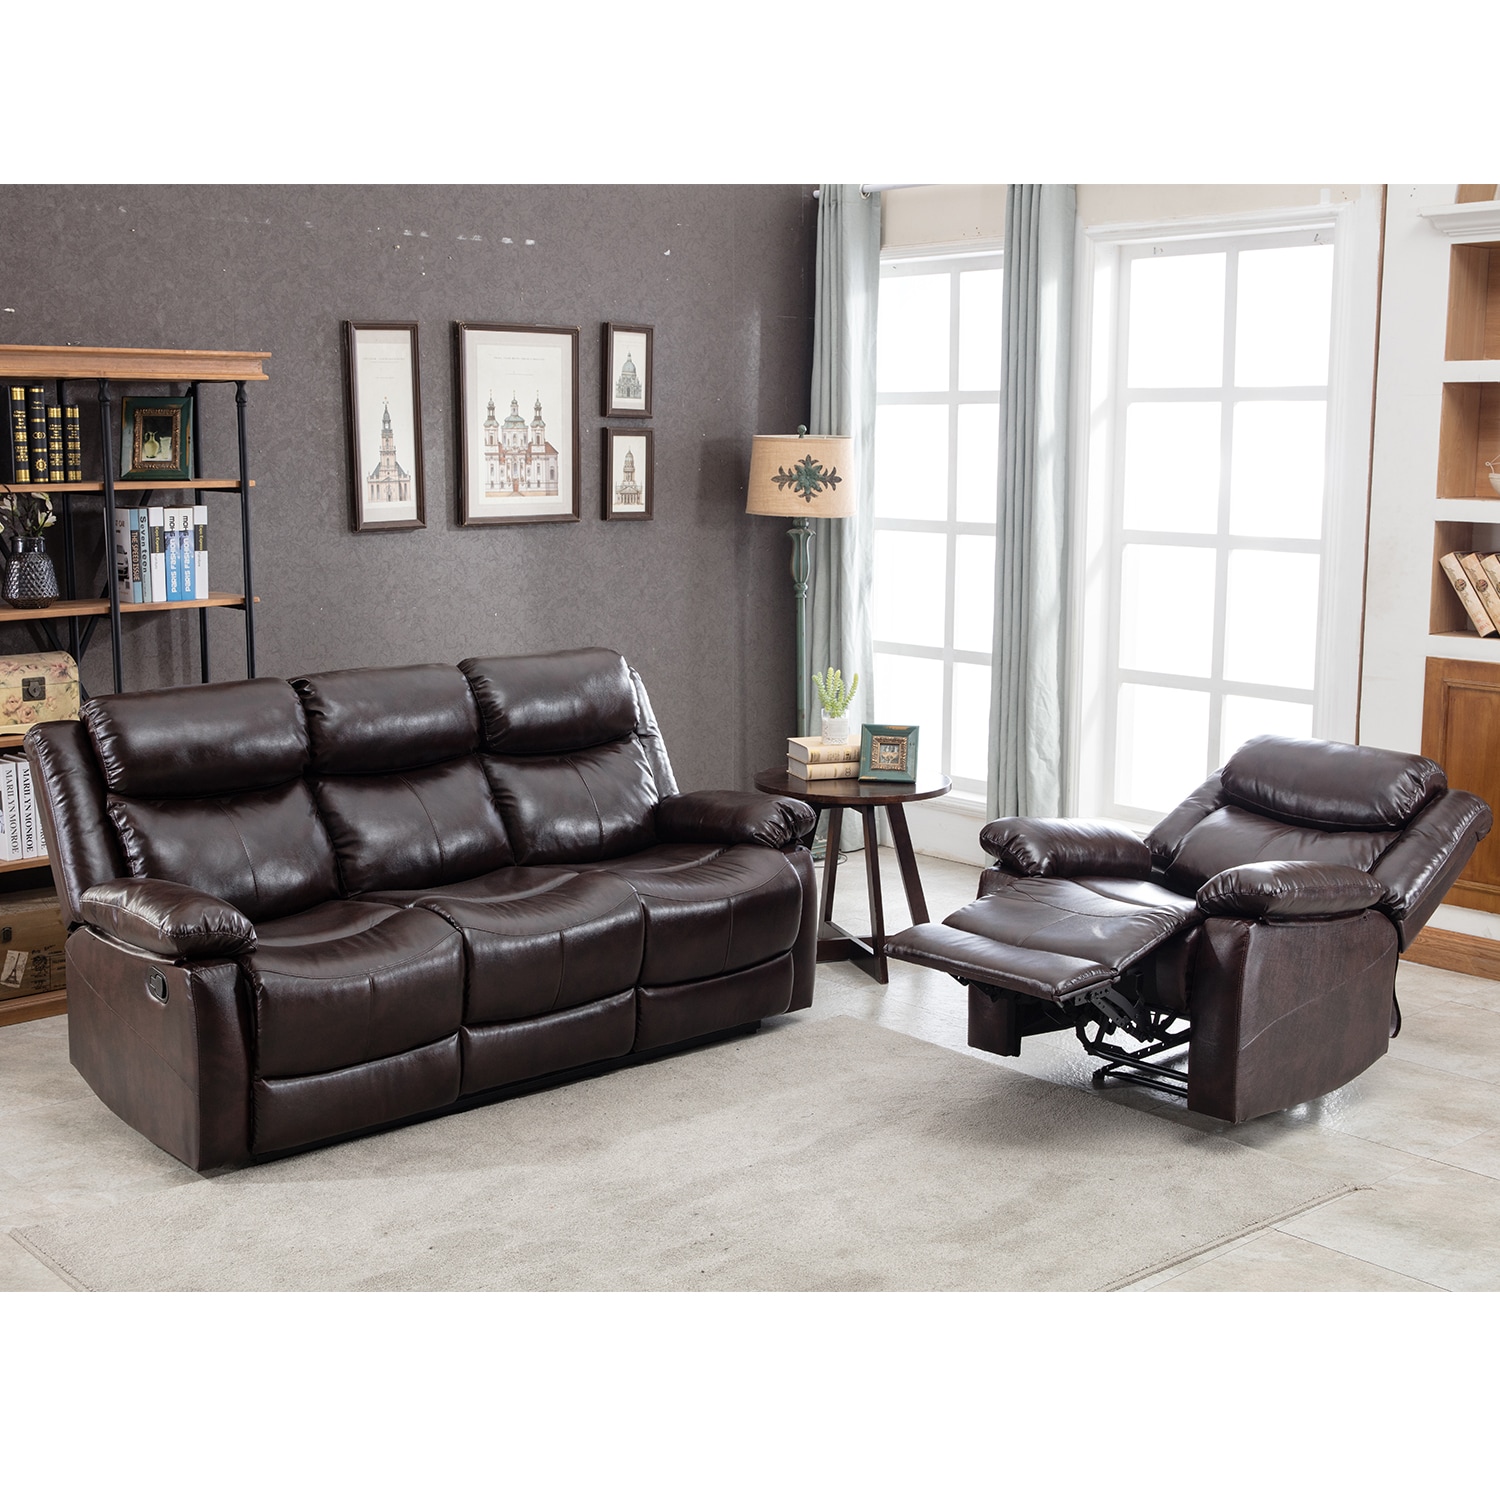 3 PC Dark Tan Brown Genuine Leather Sofa Loveseat Chair Living room Set 